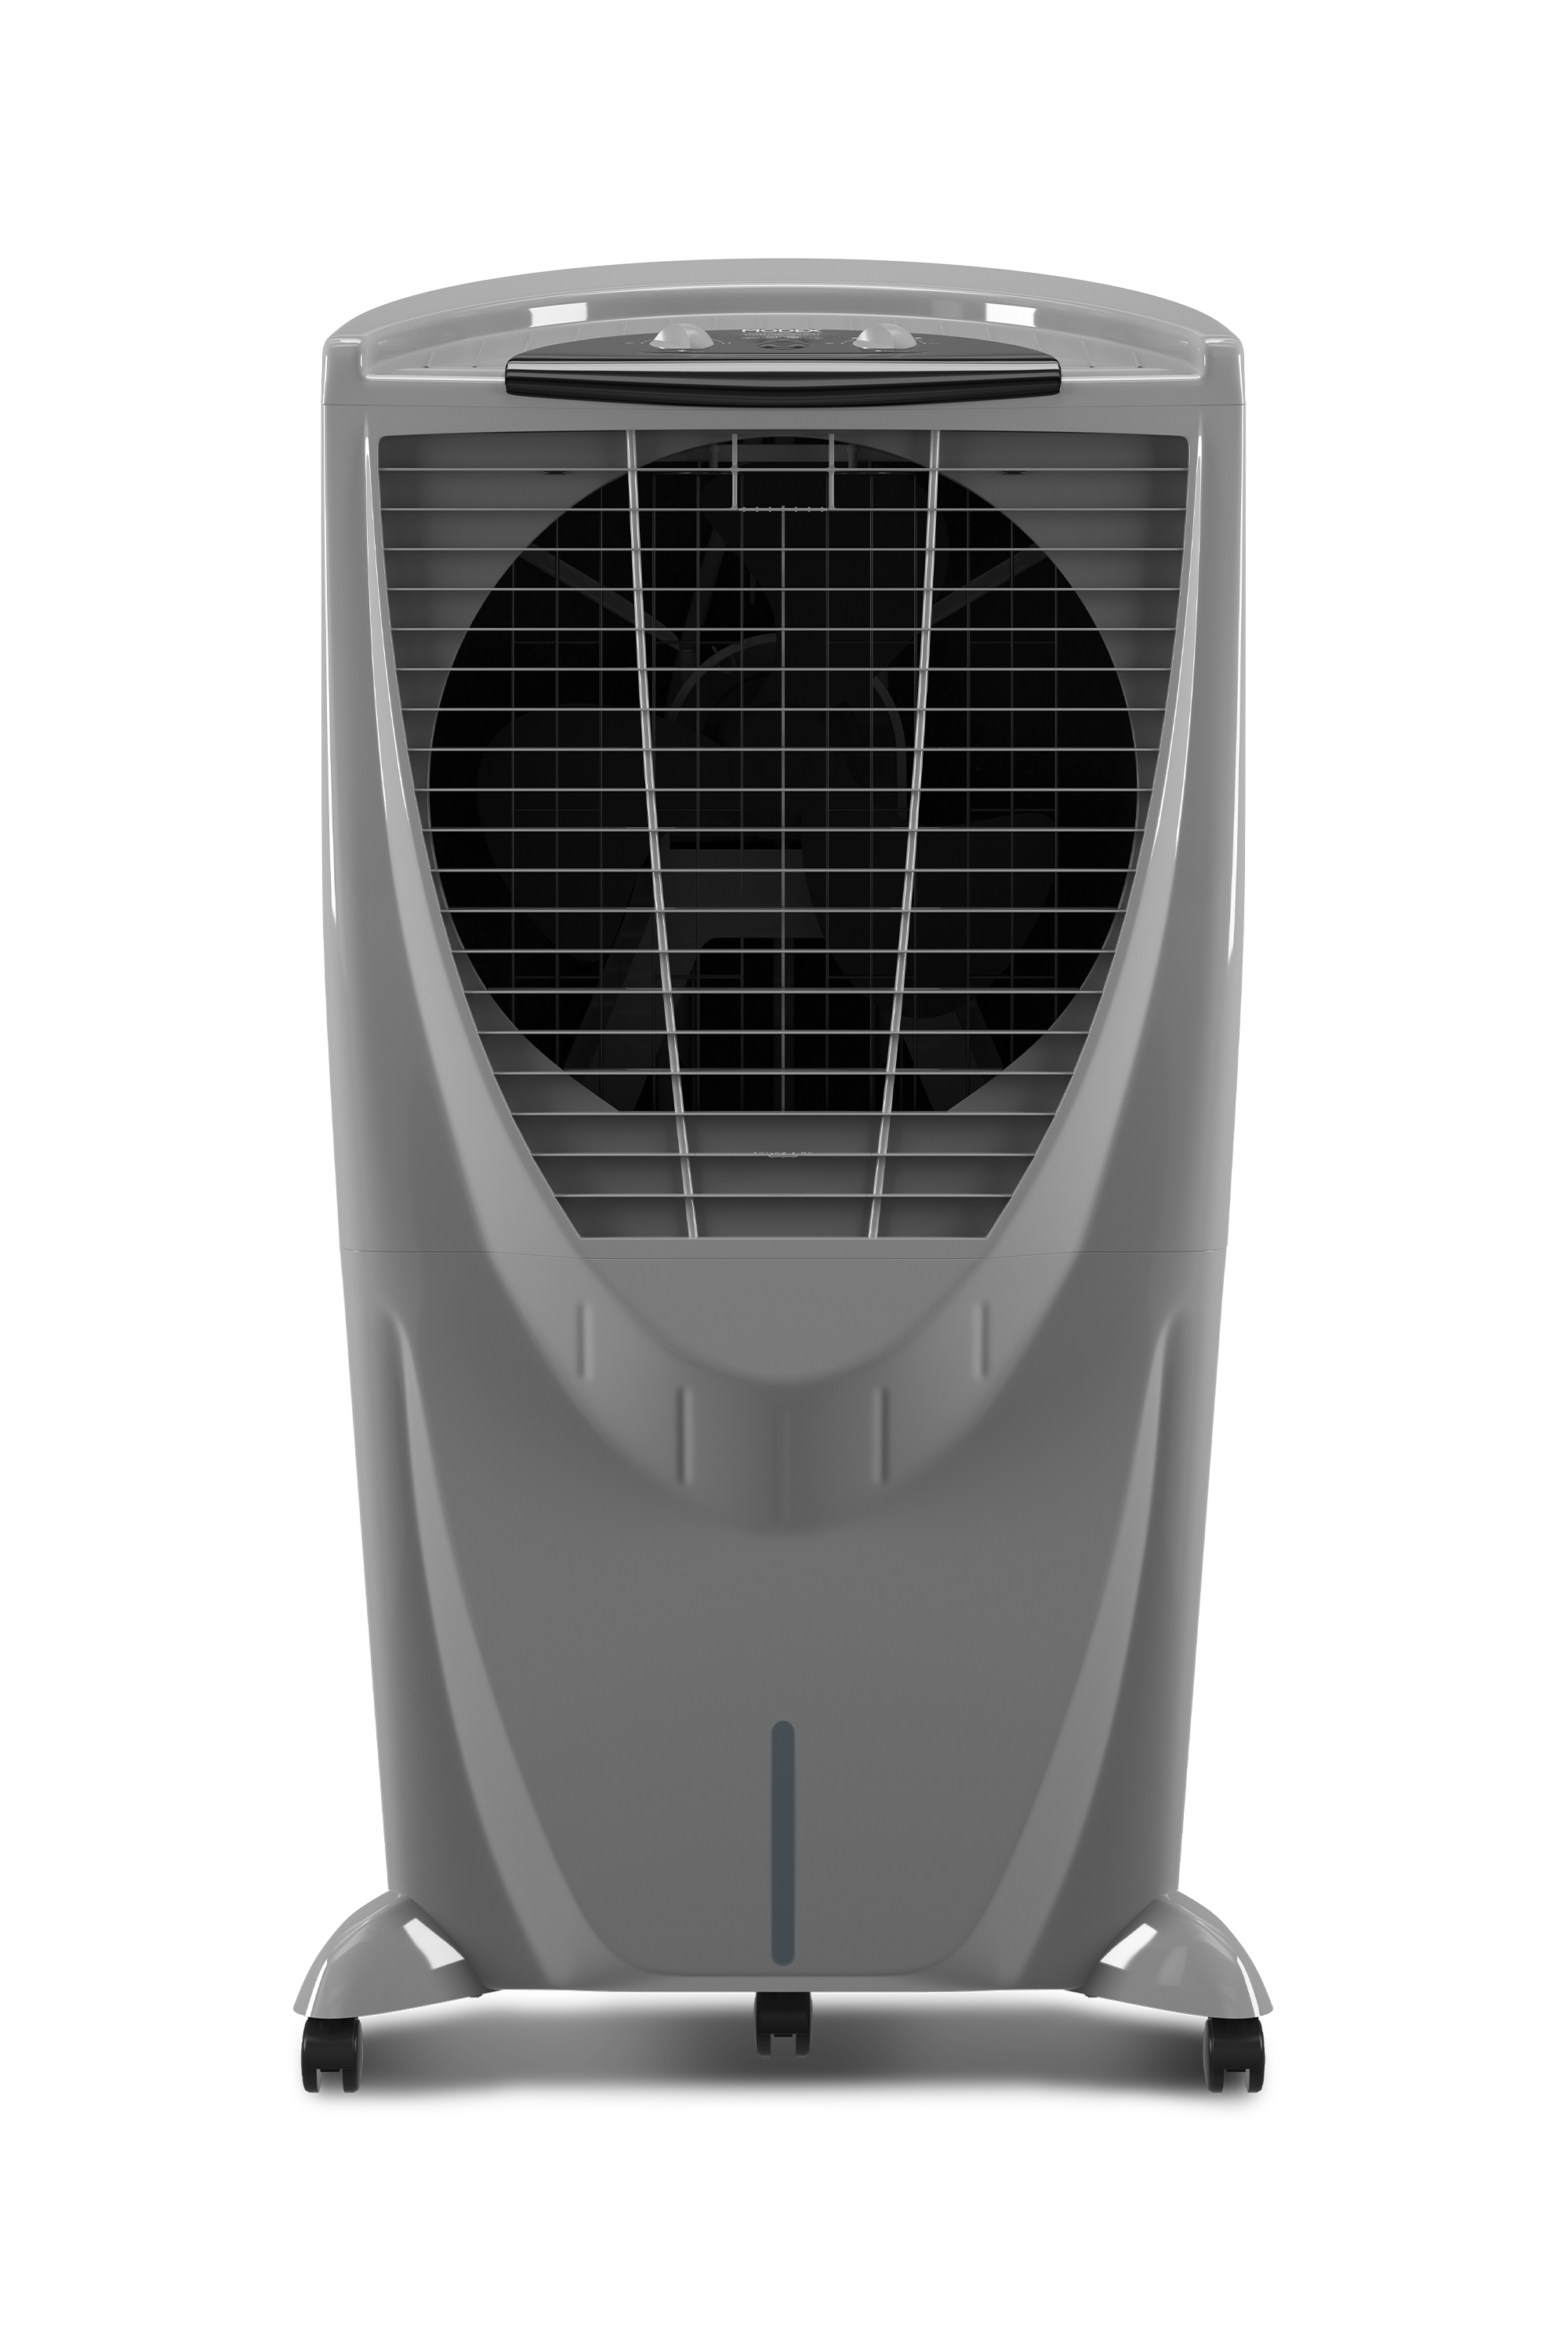 Ac994 Air Cooler